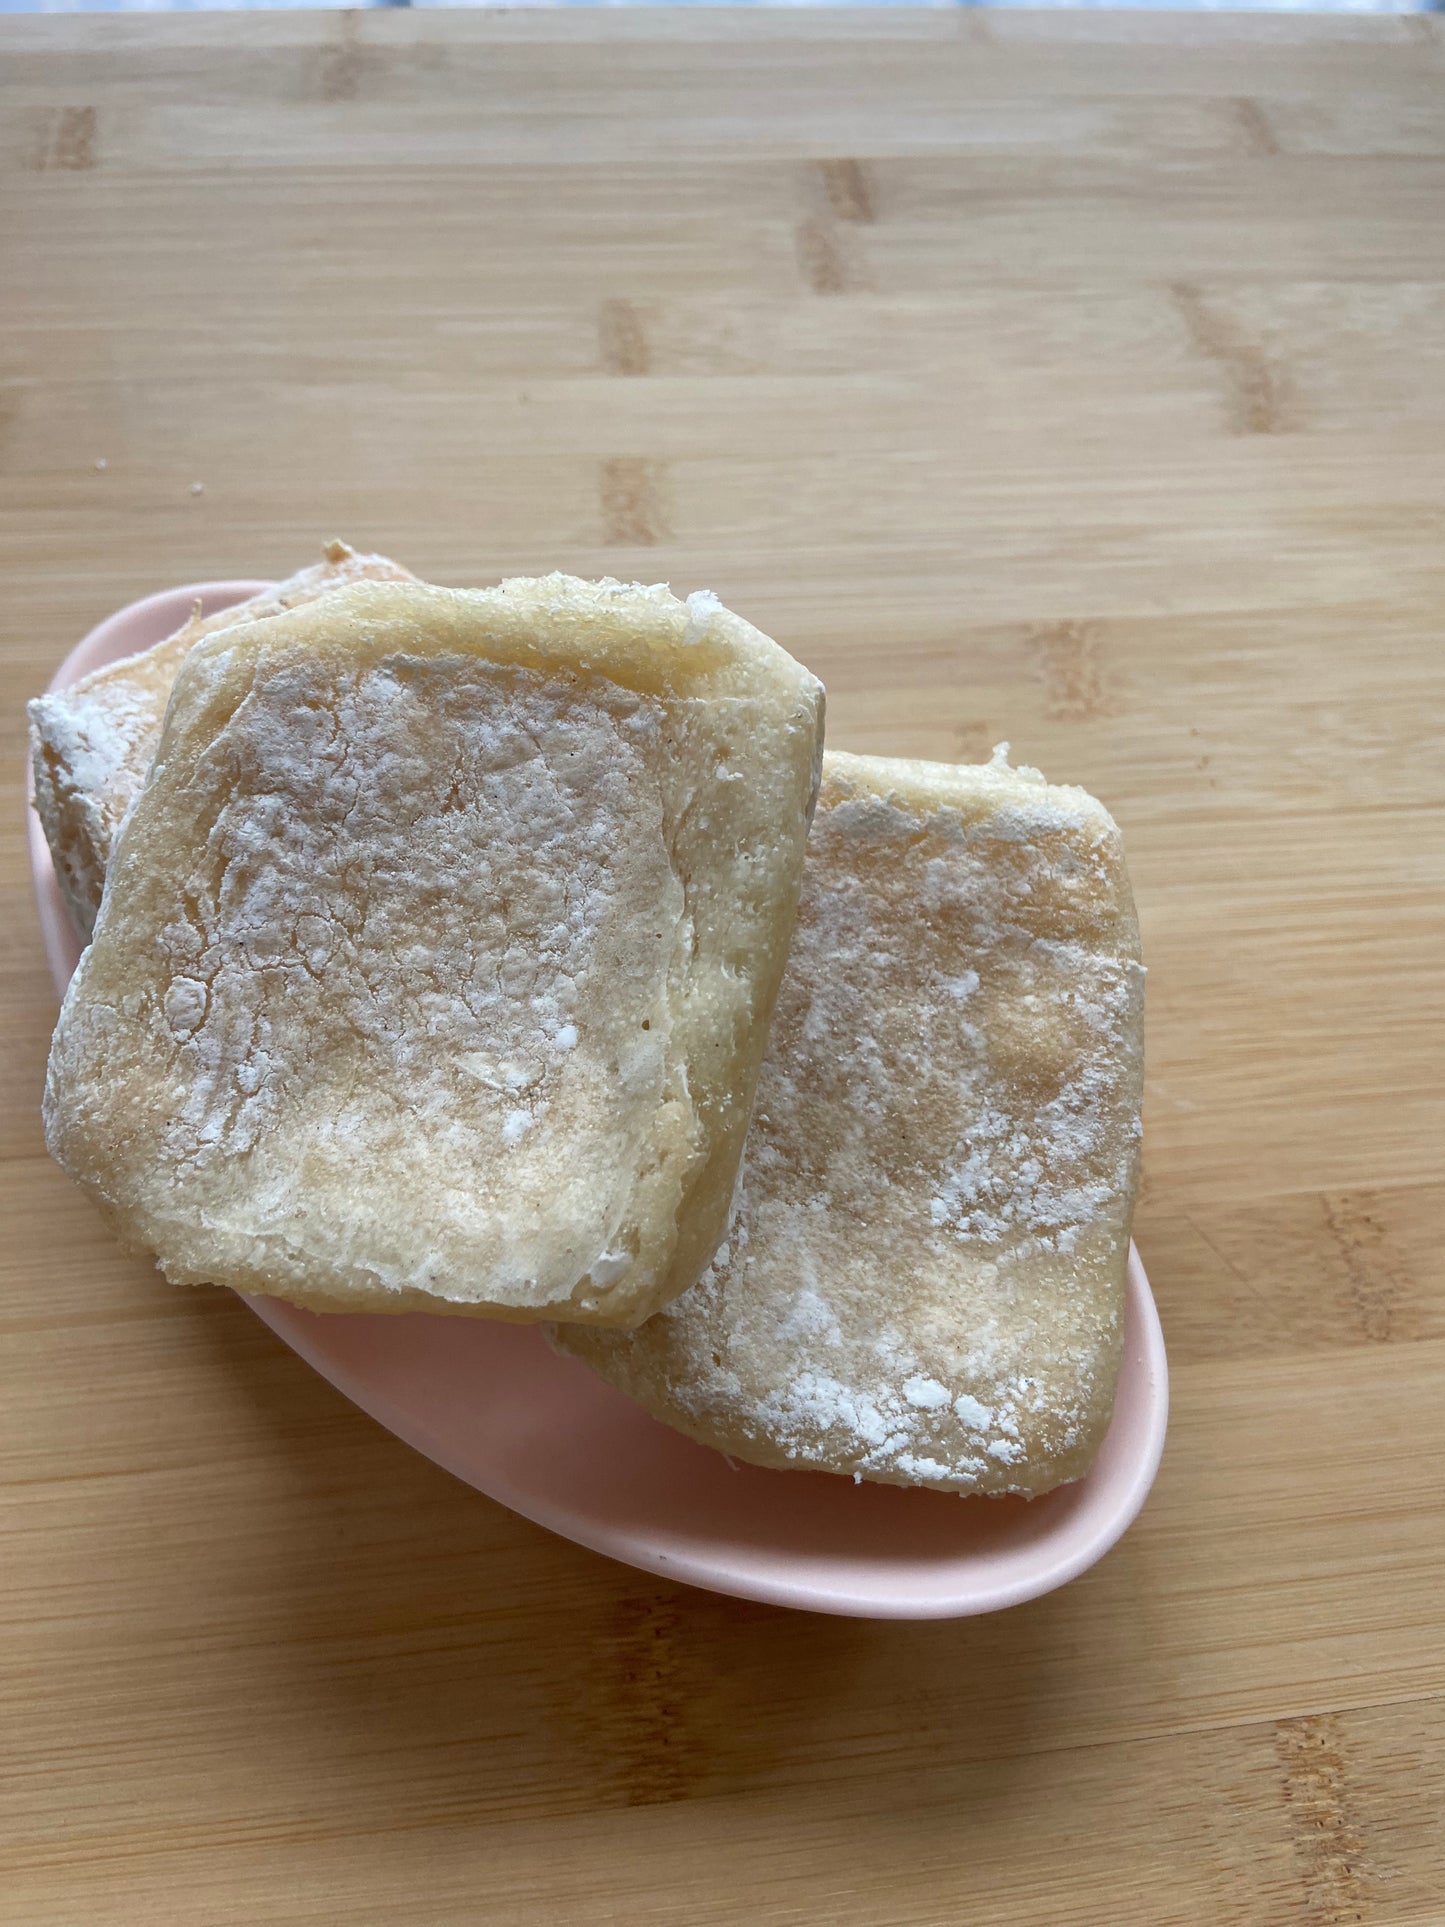 Class: Next Level Gluten-Free Simple Breads with Chef Rachel Ciordas